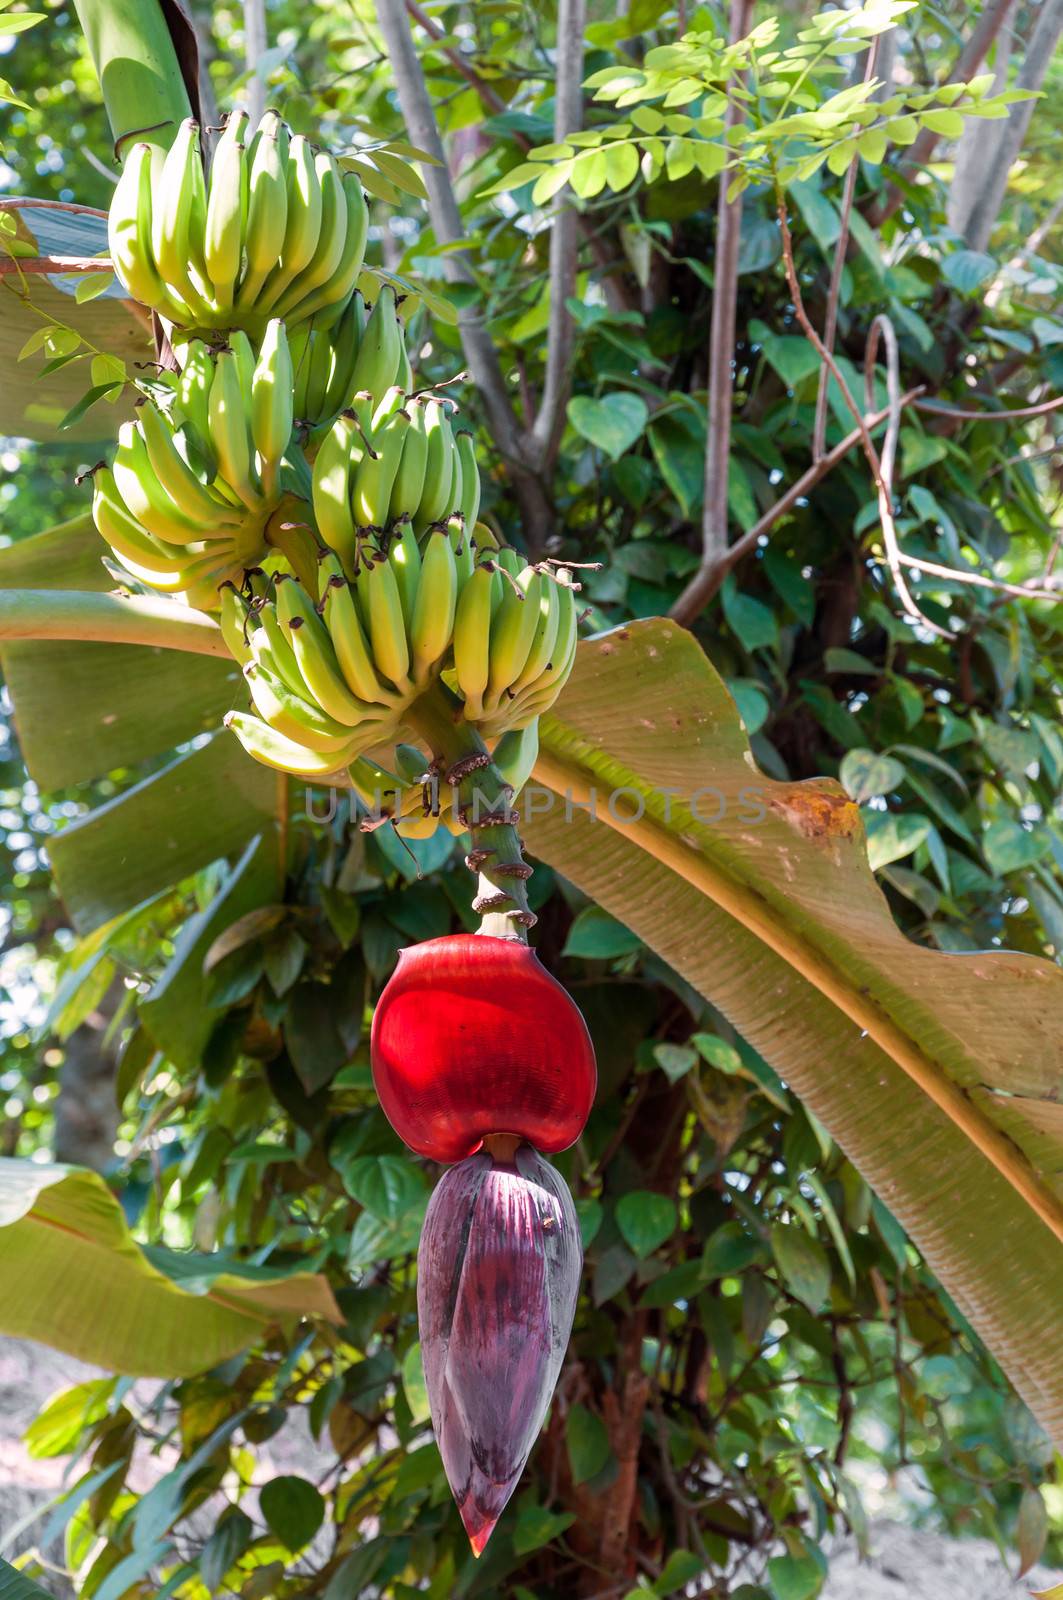 Flourishing banana flower in Spice Garden, Sri Lanka